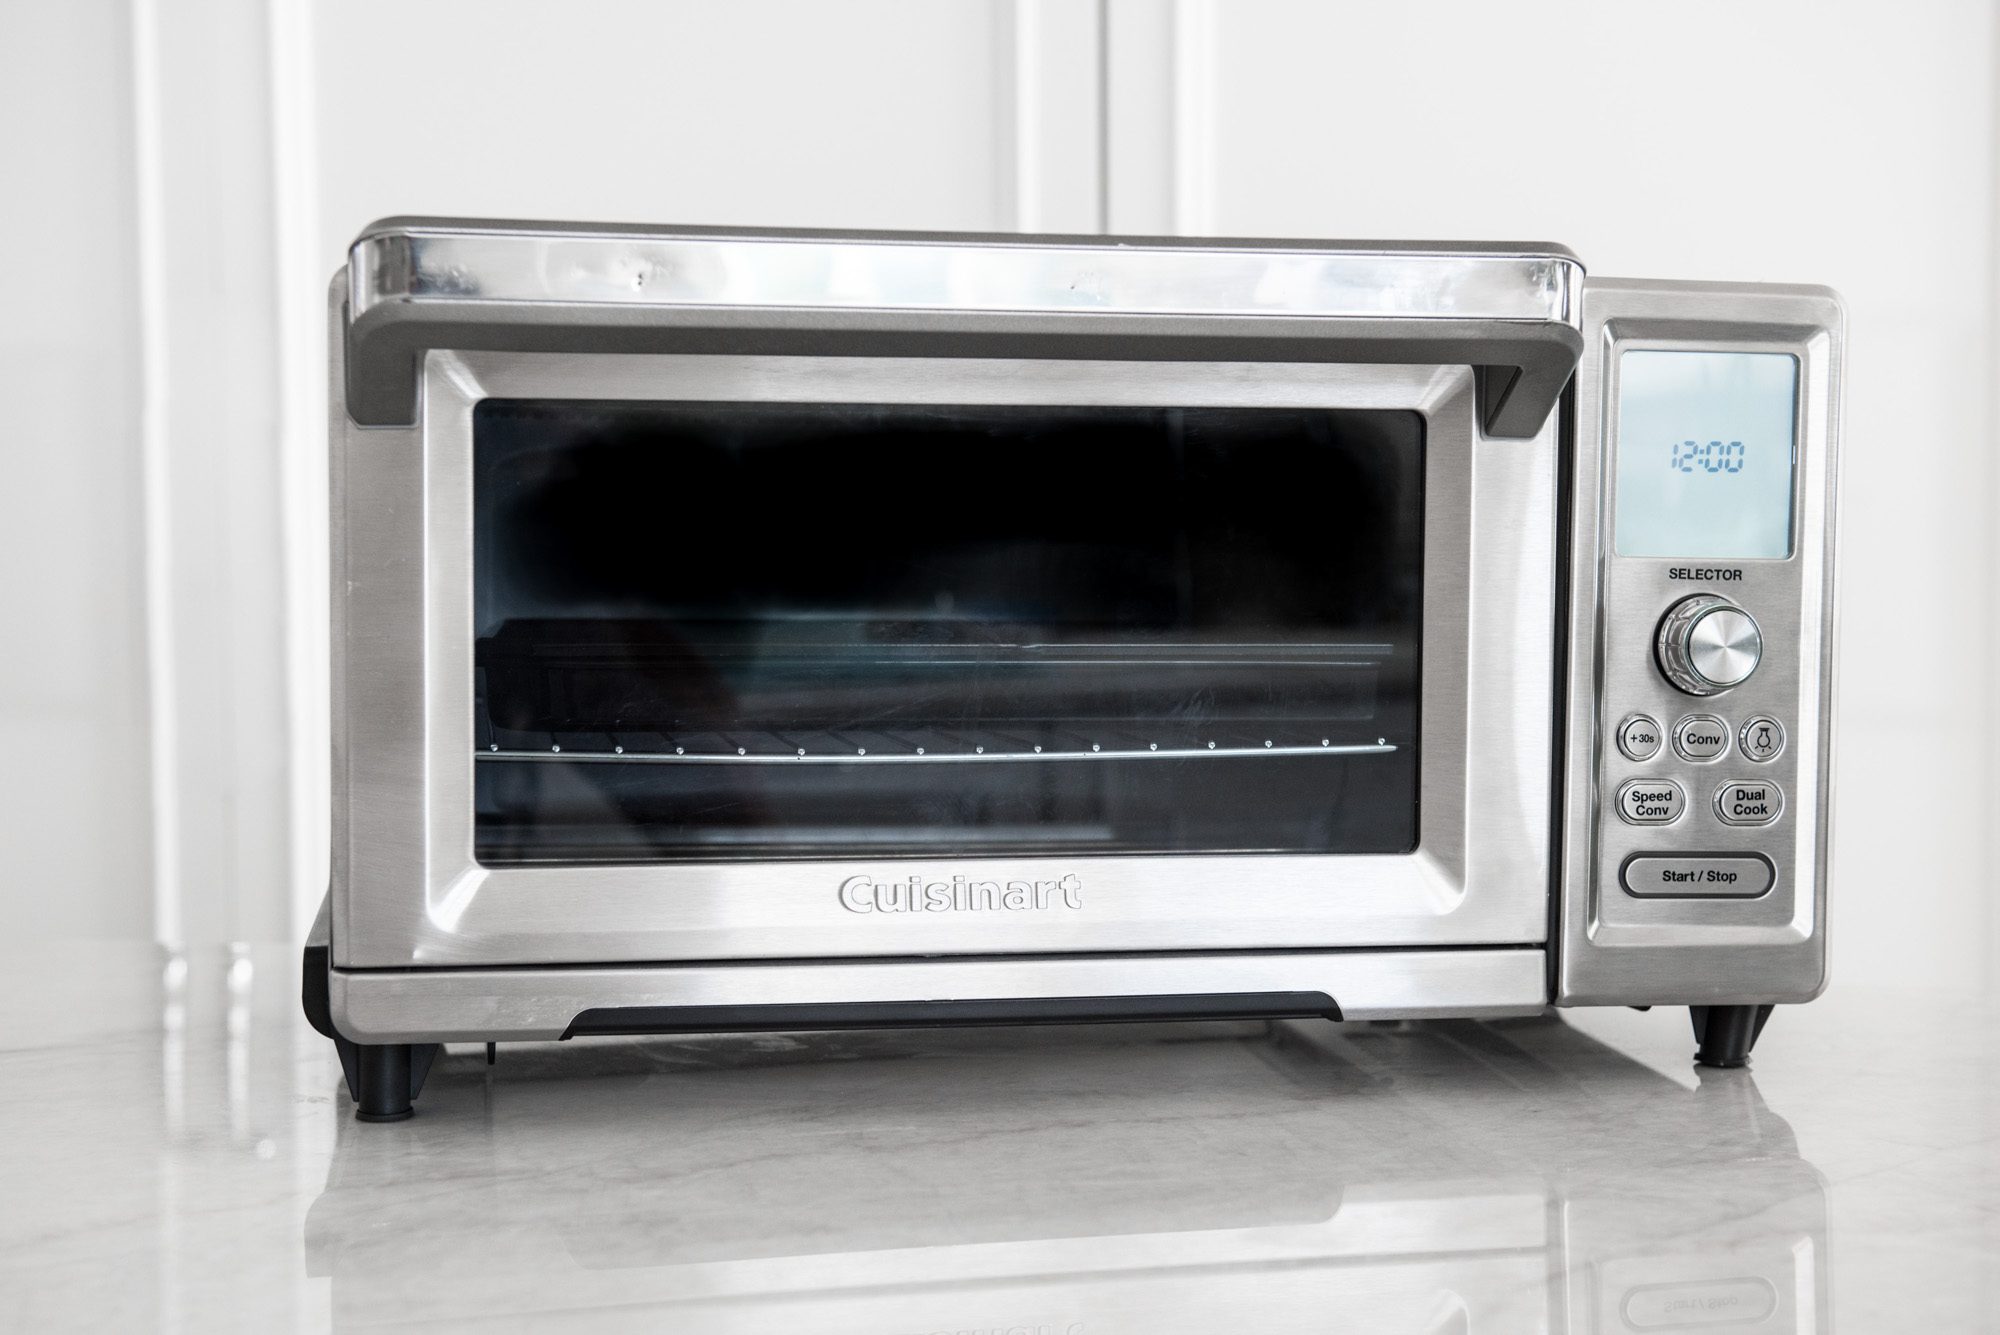 https://www.yourbestdigs.com/wp-content/uploads/2019/09/cuisinart-toaster-oven-solo.jpg